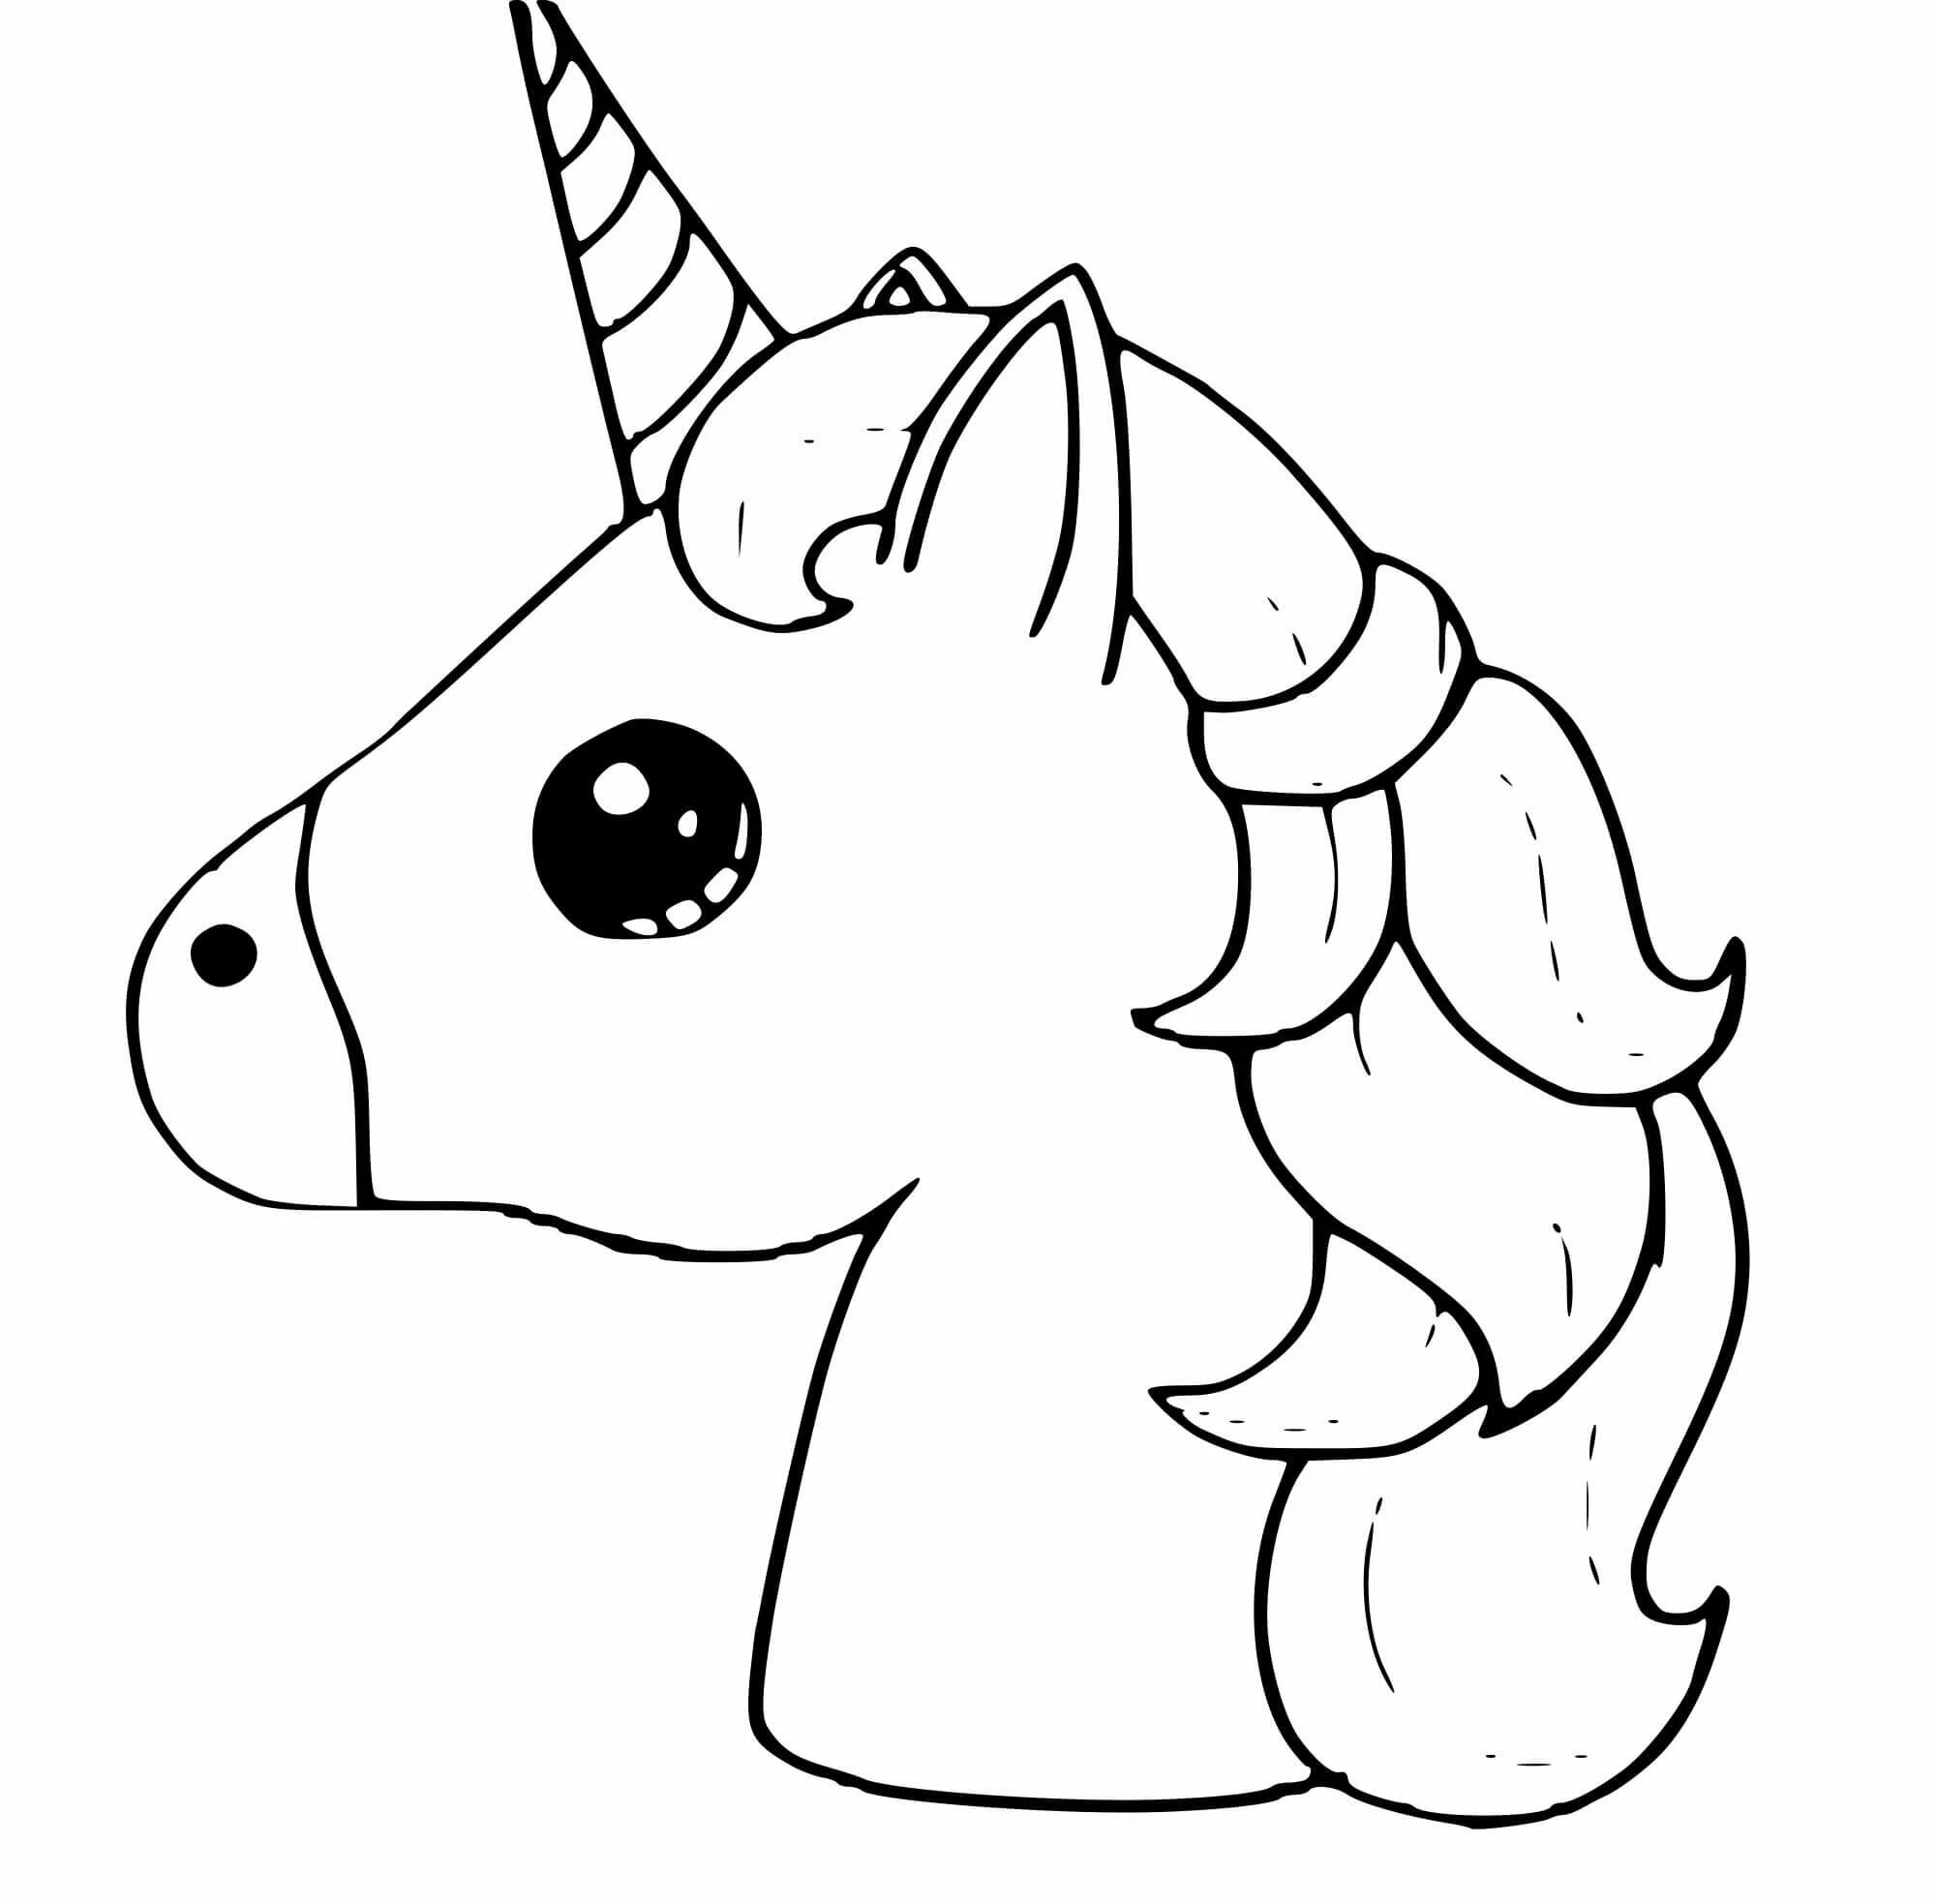 Simple unicorn #2